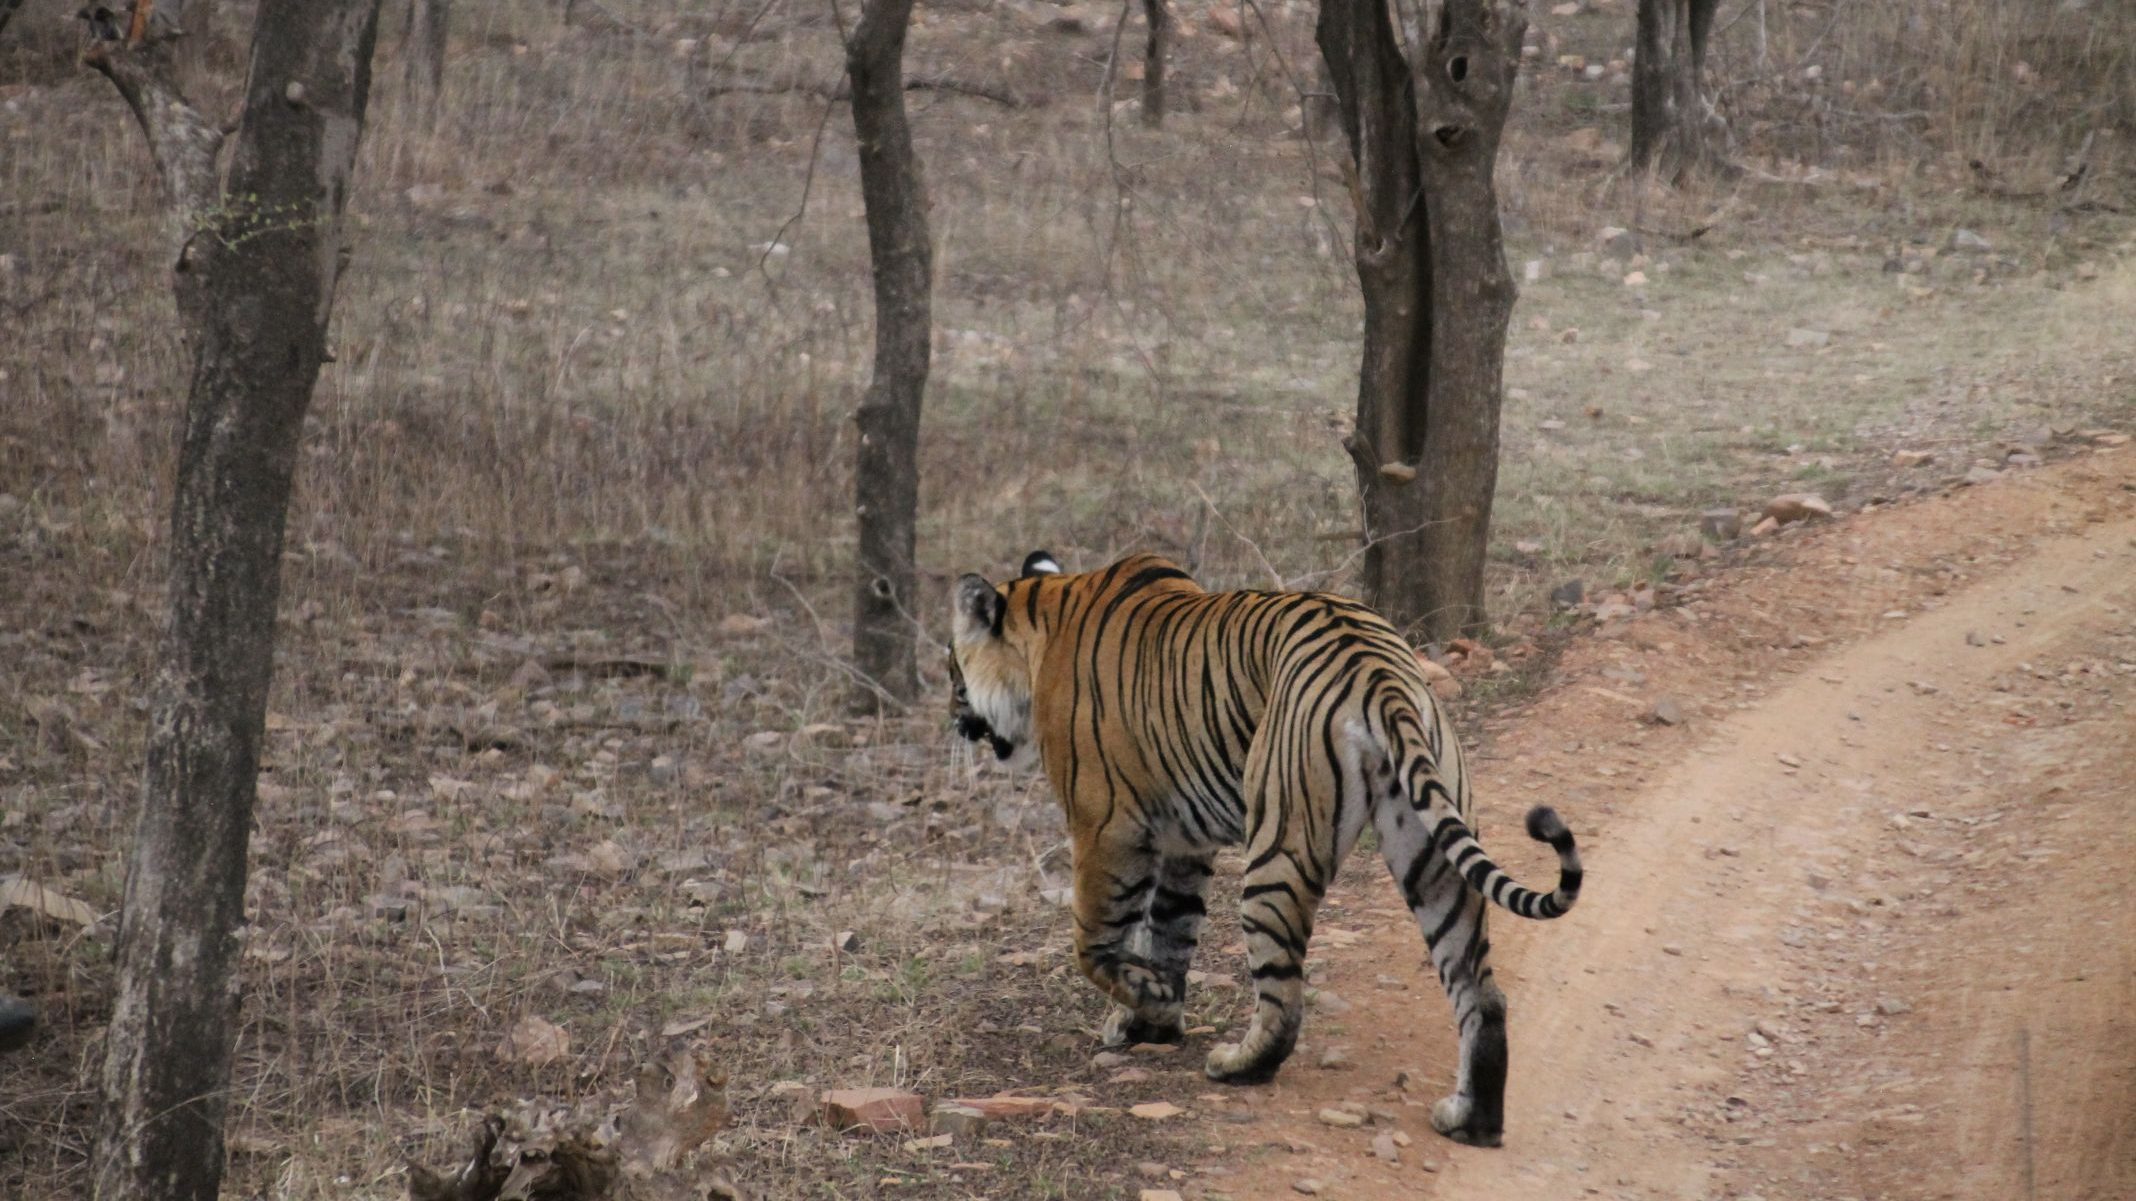 Tigress Arrowhead at Tiger Safari